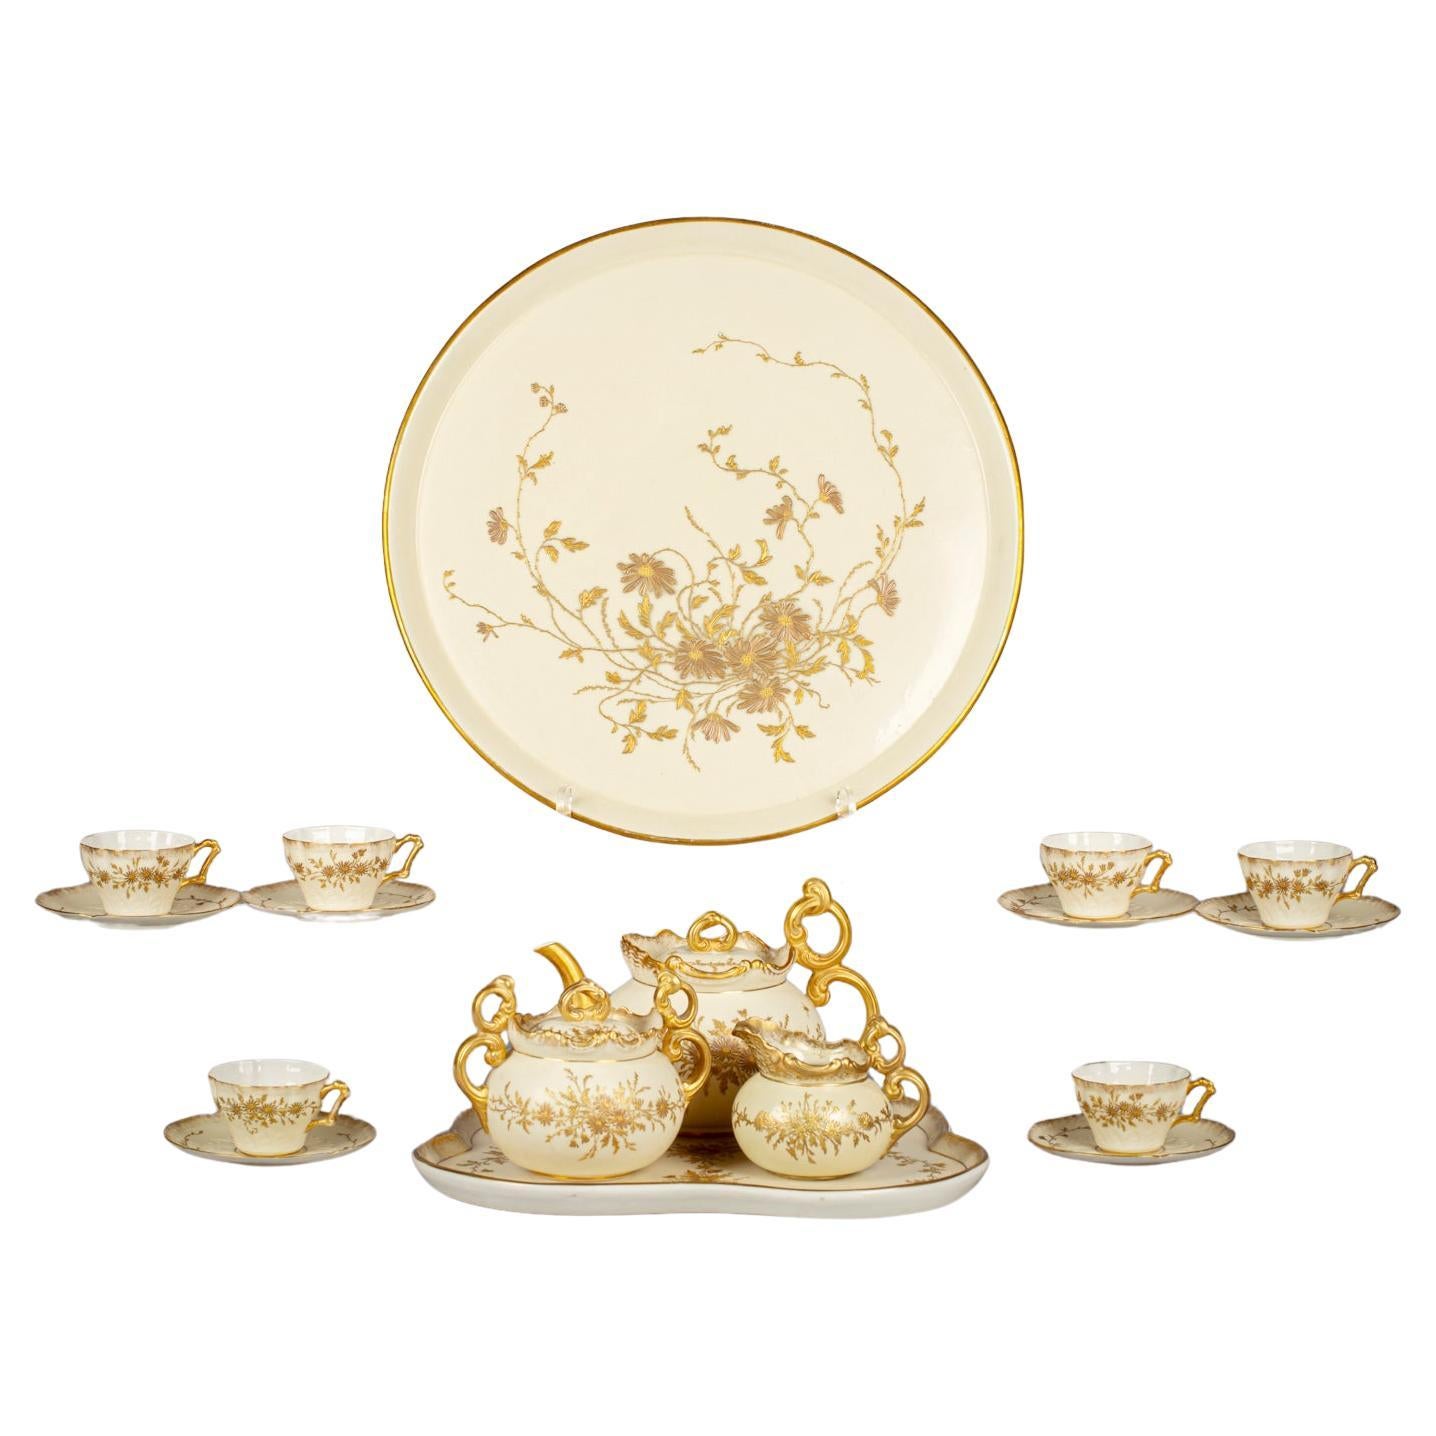 A Large Belleek Willets Porcelain Tea Service, circa 1890